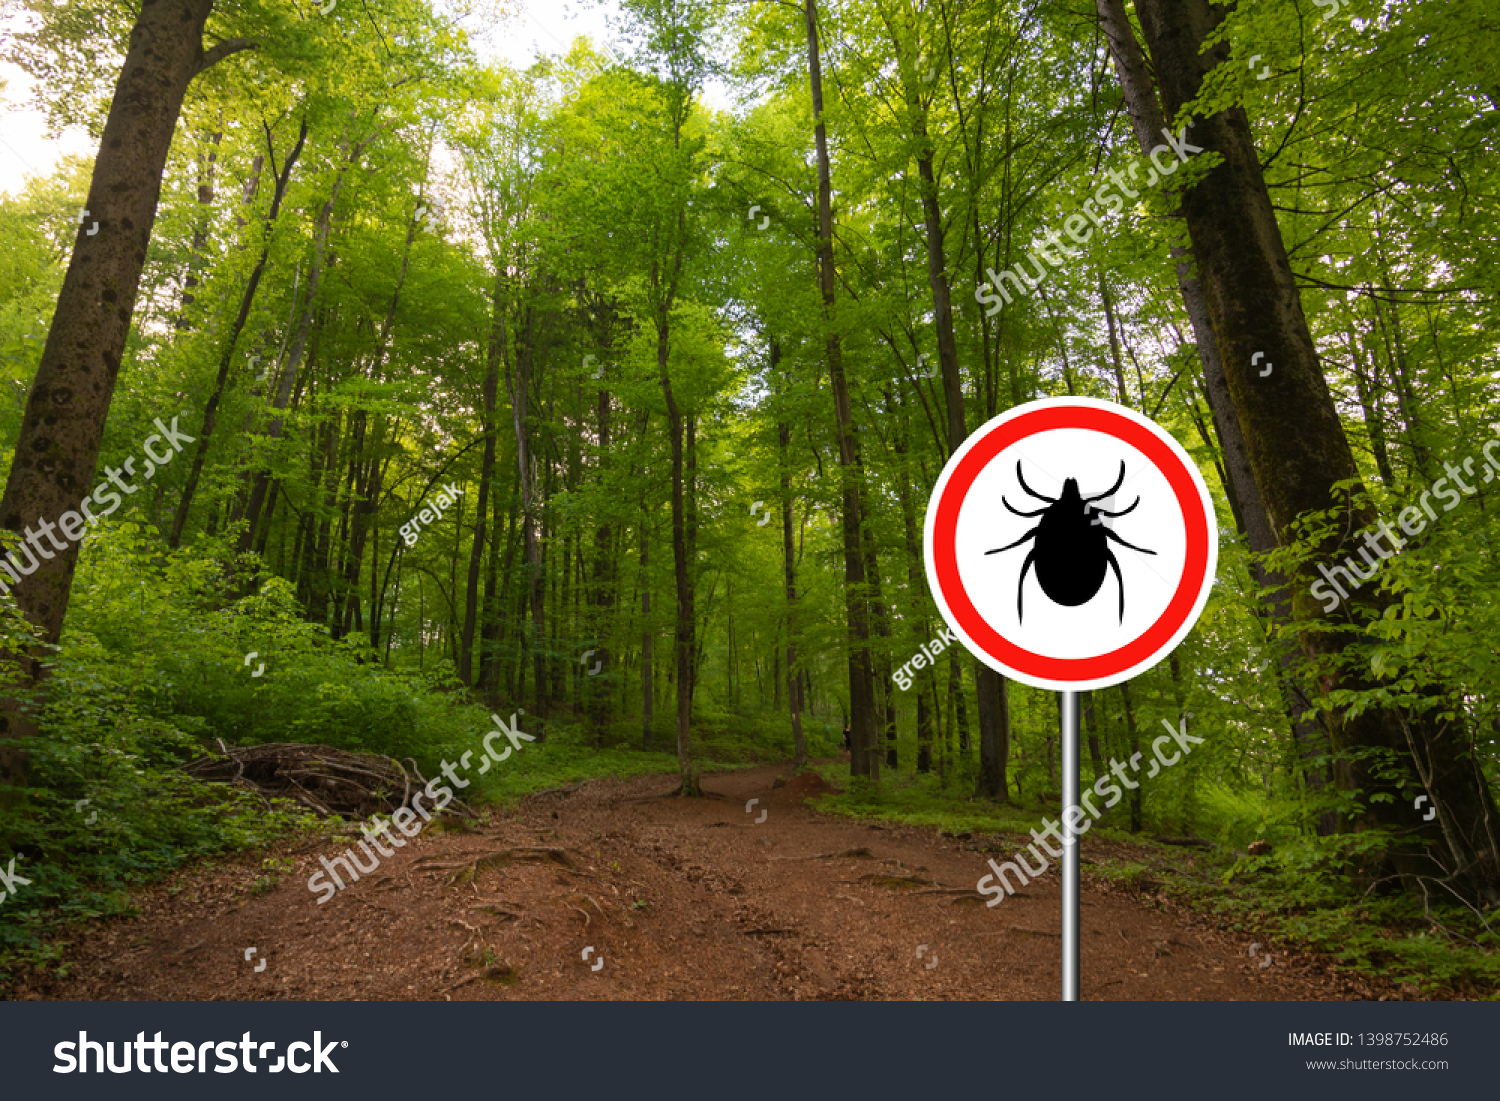 Tick insect warning sign in nature forest. Lyme disease and tick-borne meningitis (meningoencephalitis) transmitter. #1398752486